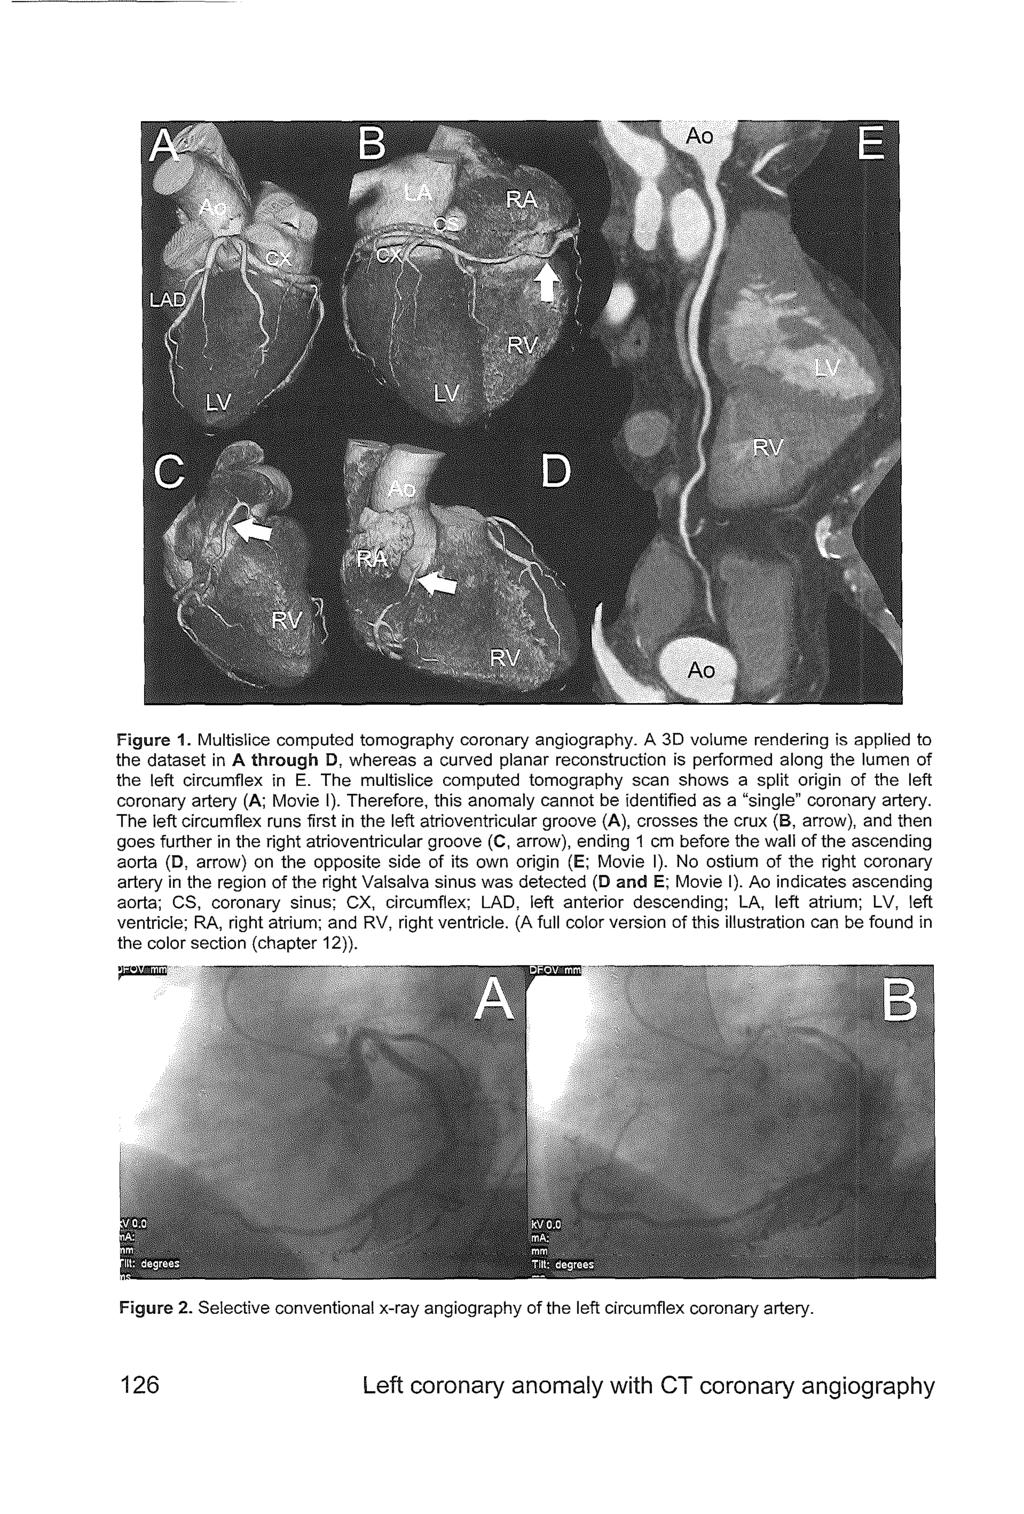 Figure 1. Multislice computed tomography coronary angiography.